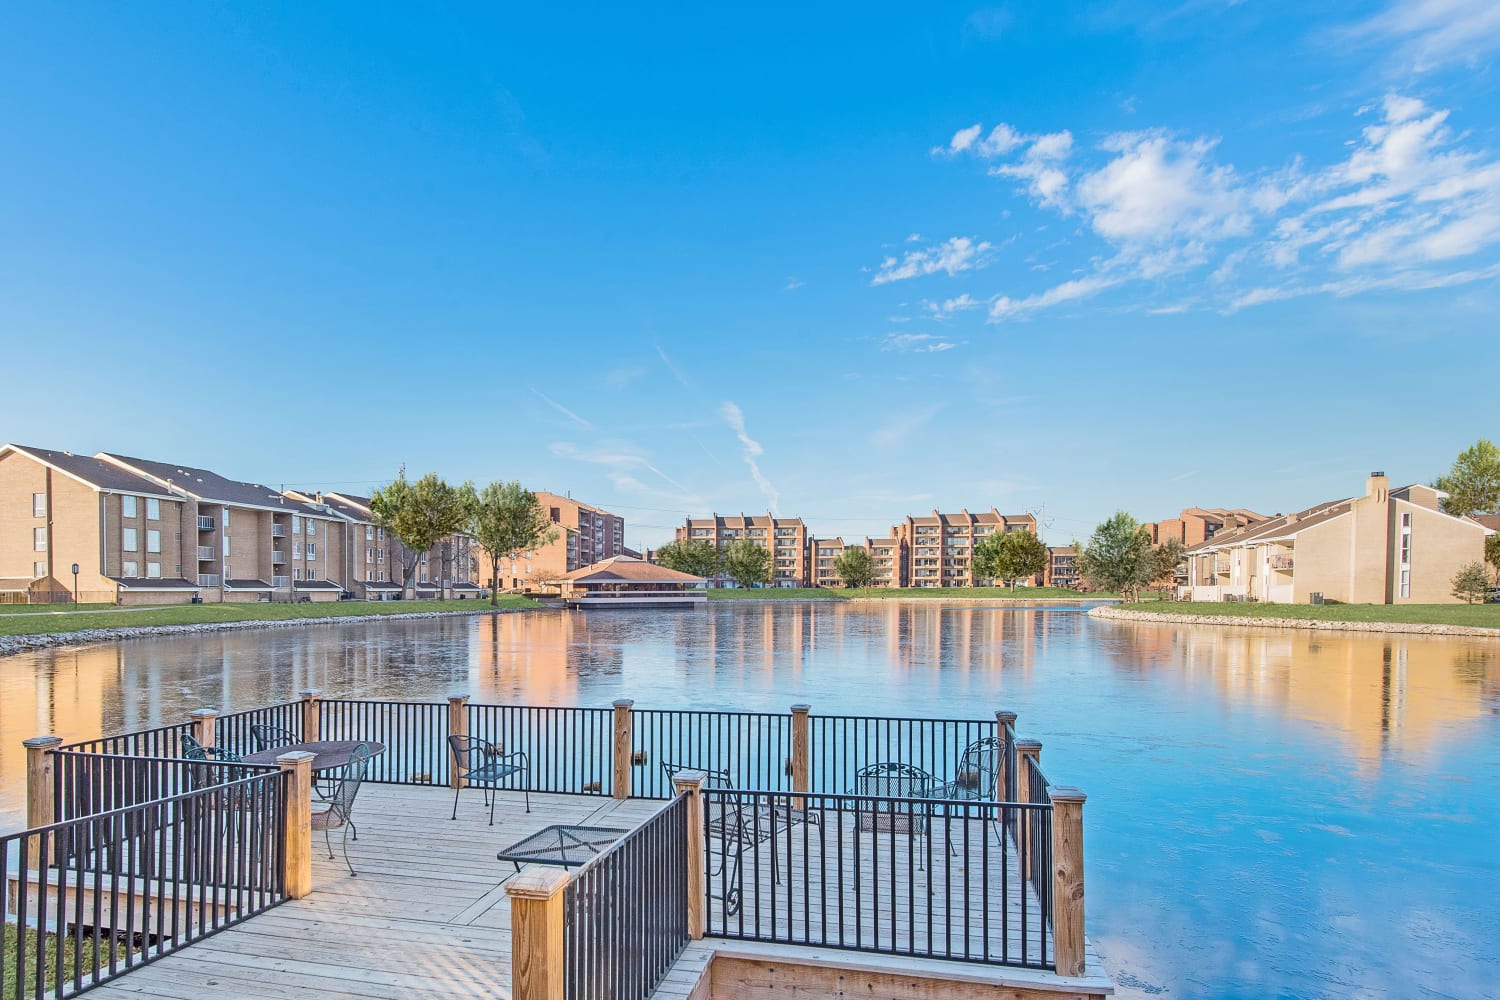 Pier and view of Regency Lakeside Apartment Homes across the lake in Omaha, Nebraska